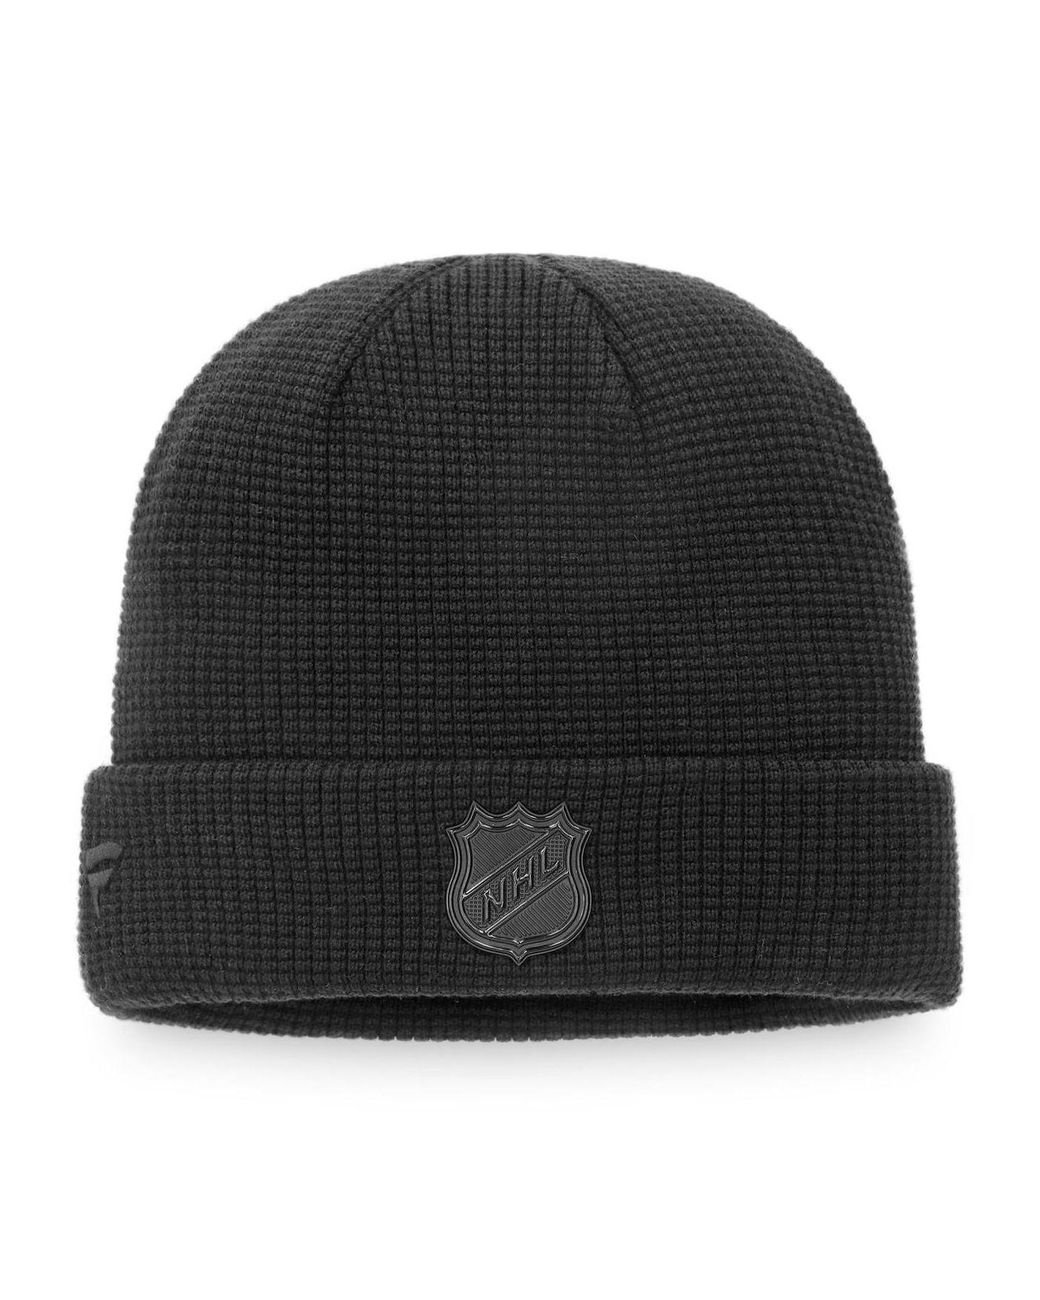 Men's Fanatics Branded Gray/Black Vancouver Canucks Authentic Pro Home Ice Trucker Adjustable Hat